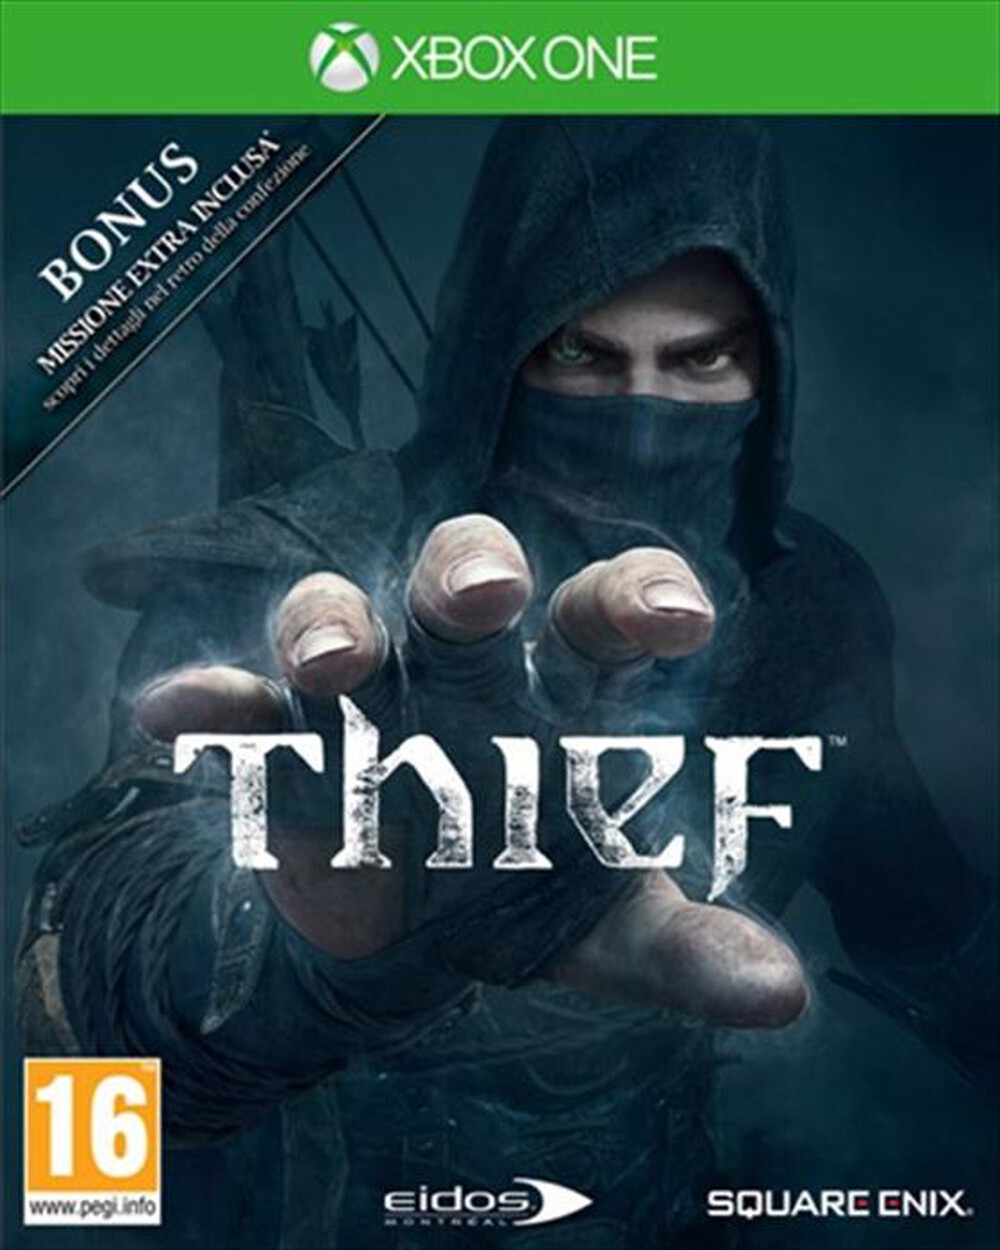 "HALIFAX - Thief Xbox One"